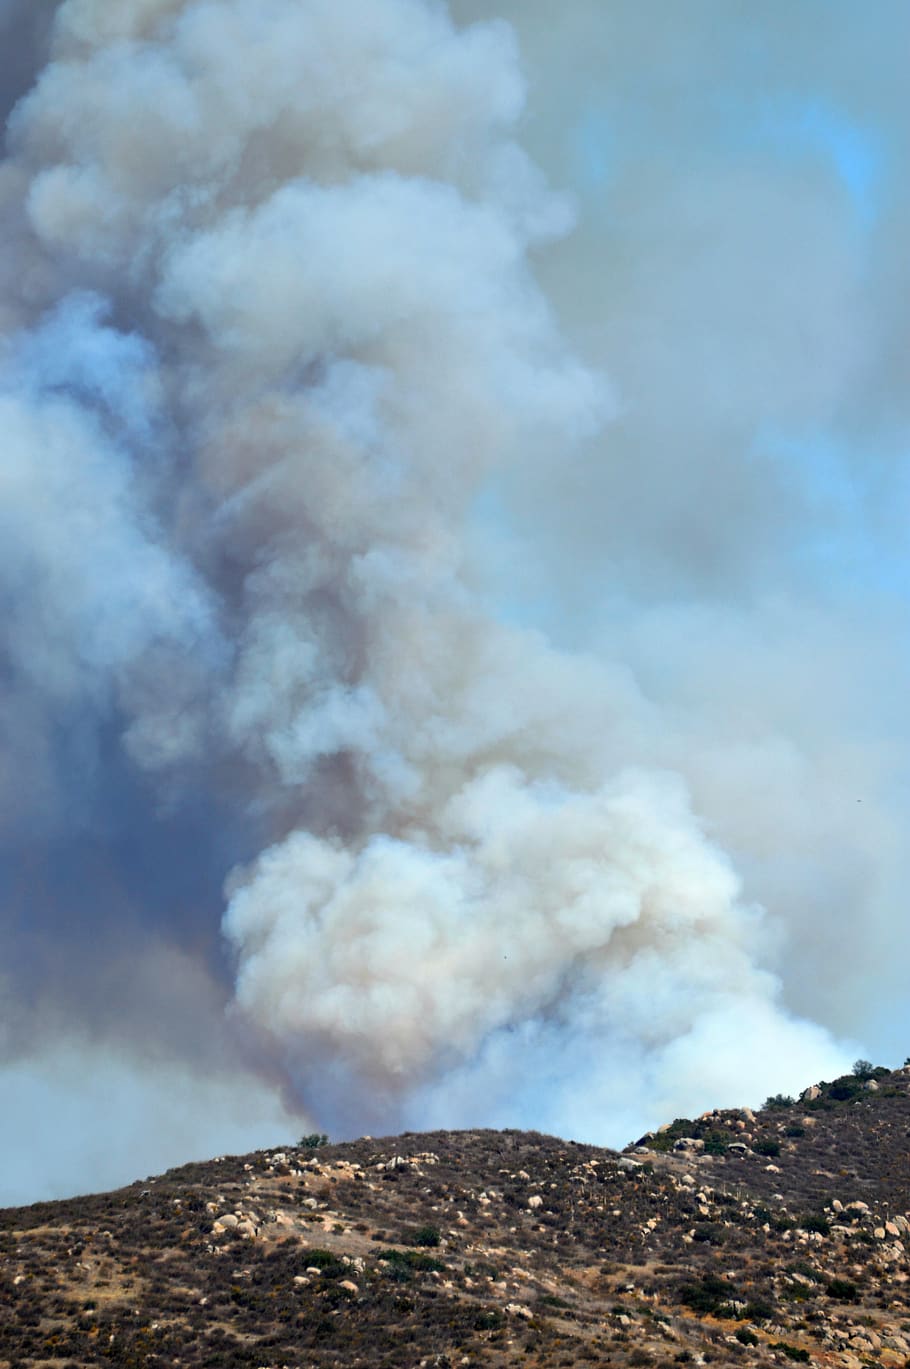 wildfire, smoke, heat, hot, fire, danger, usa, hills, mountains, california